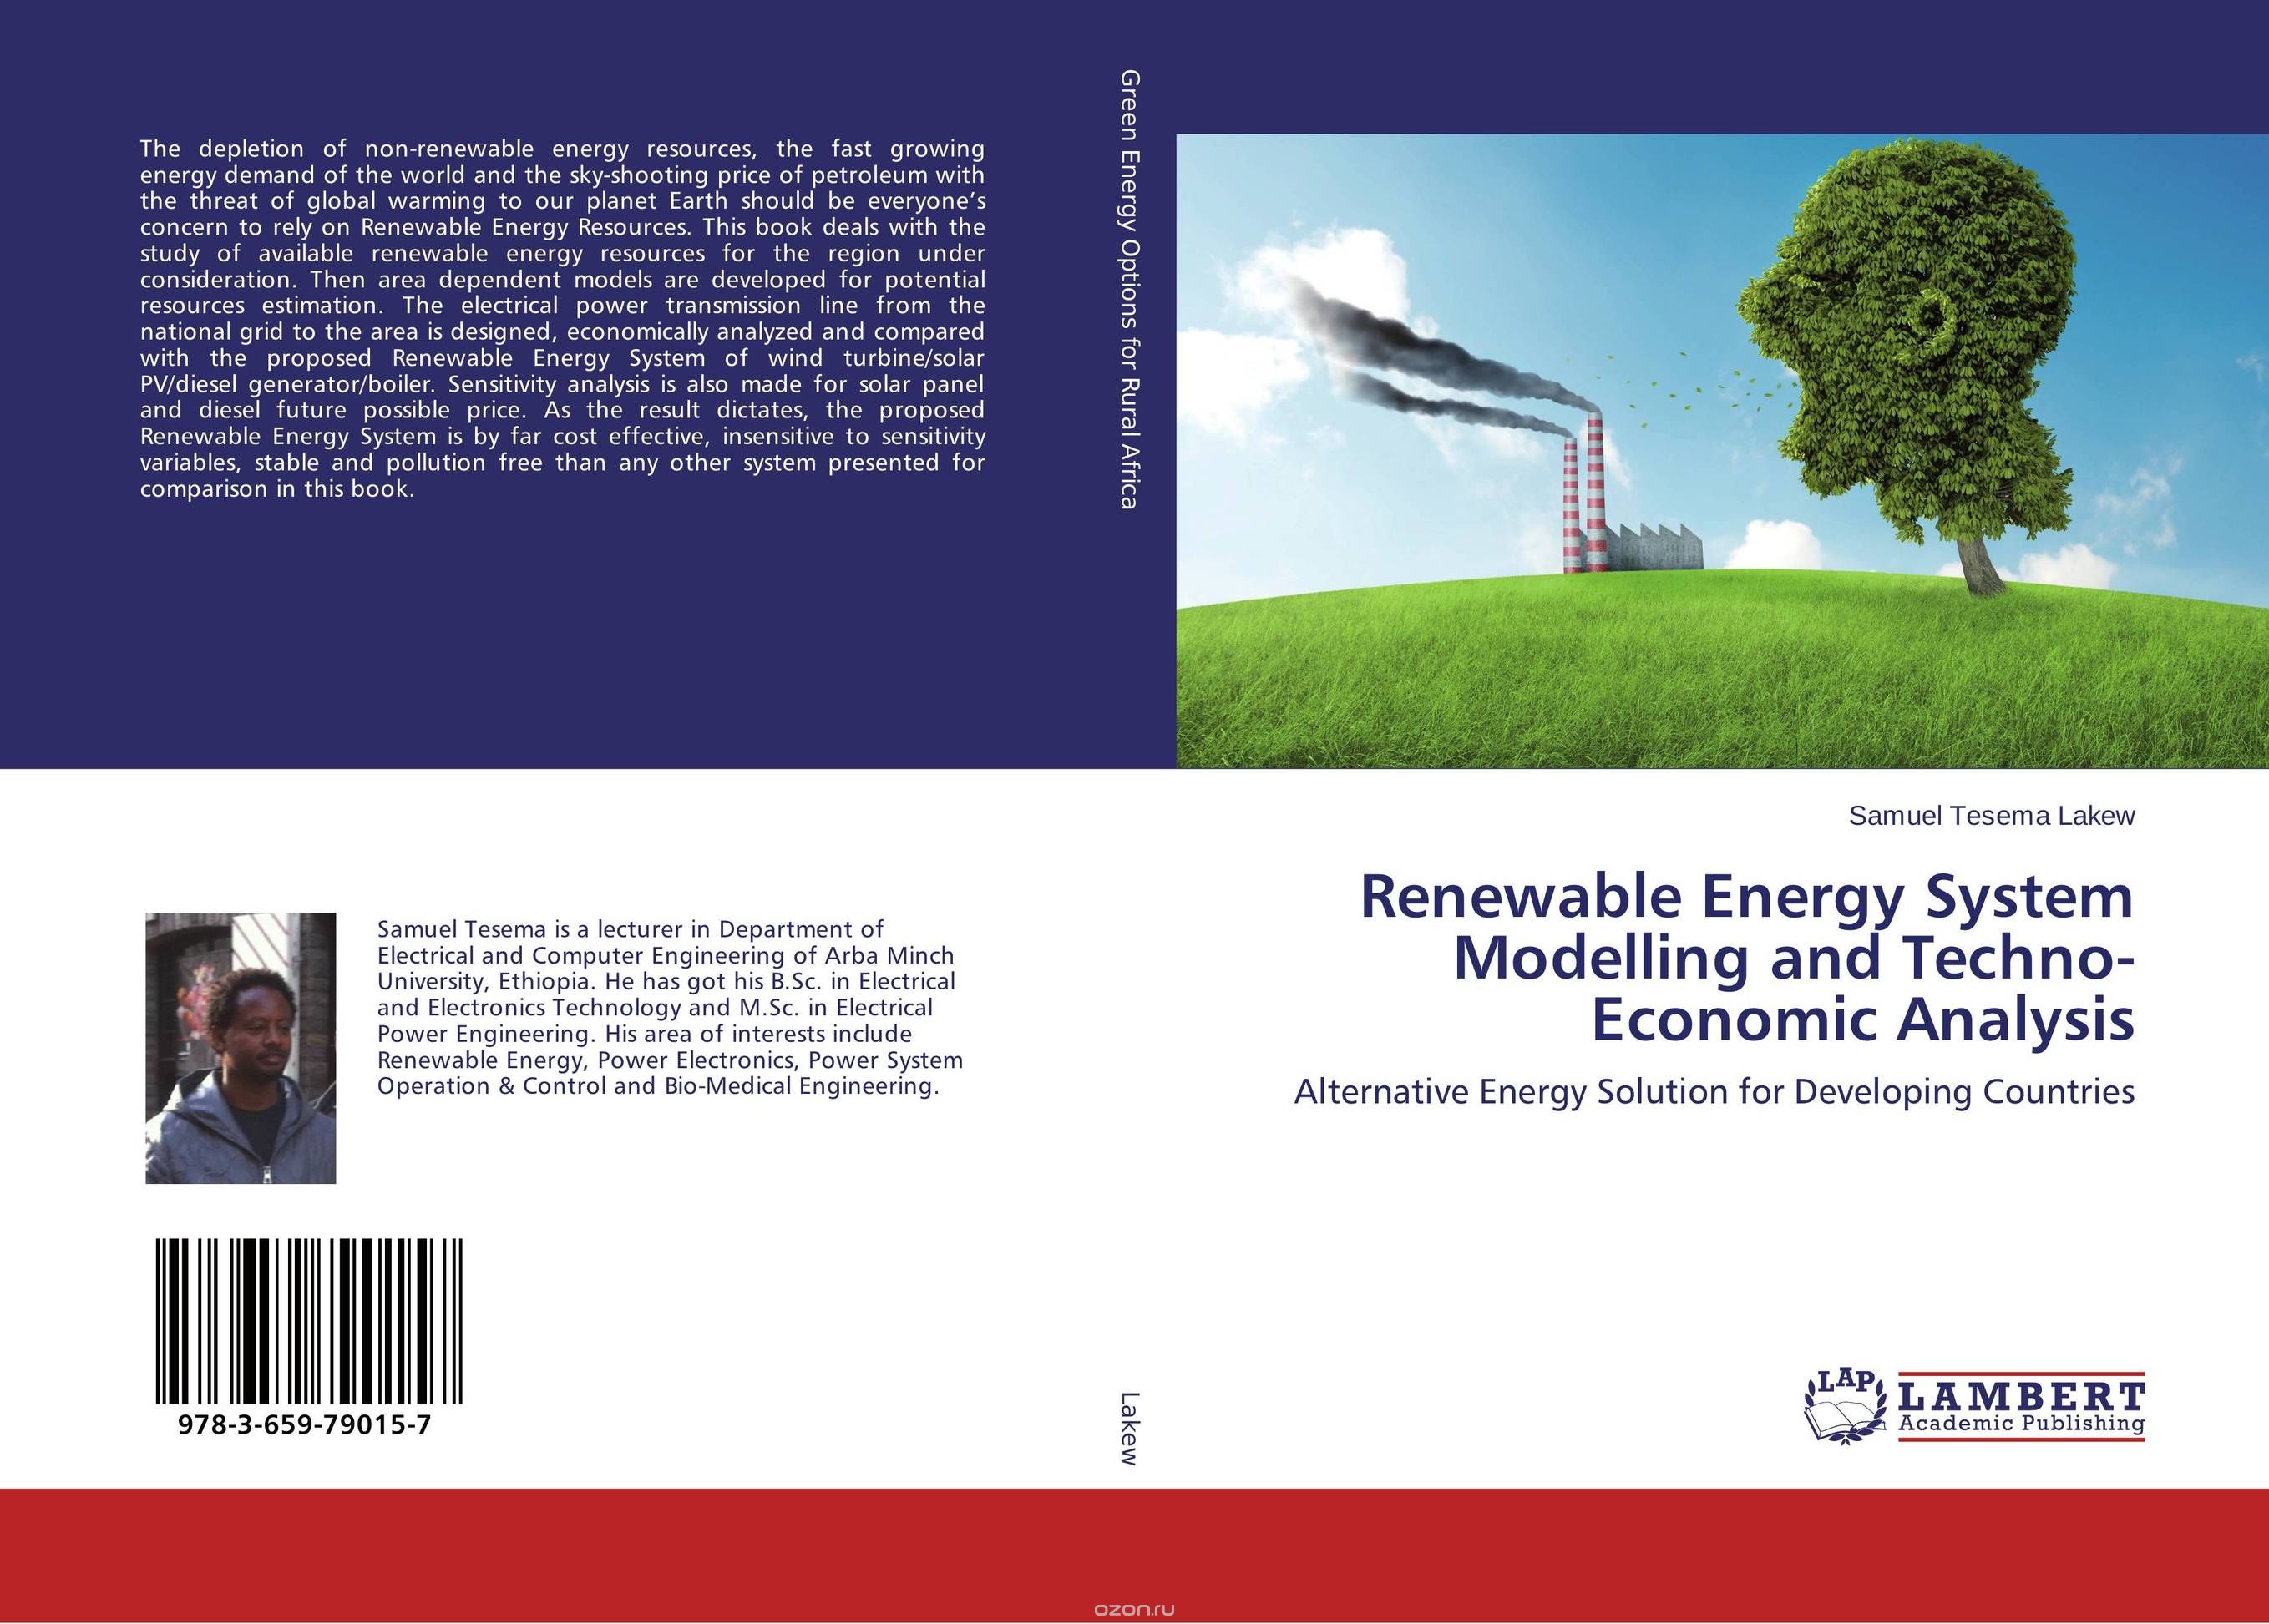 Скачать книгу "Renewable Energy System Modelling and Techno-Economic Analysis"